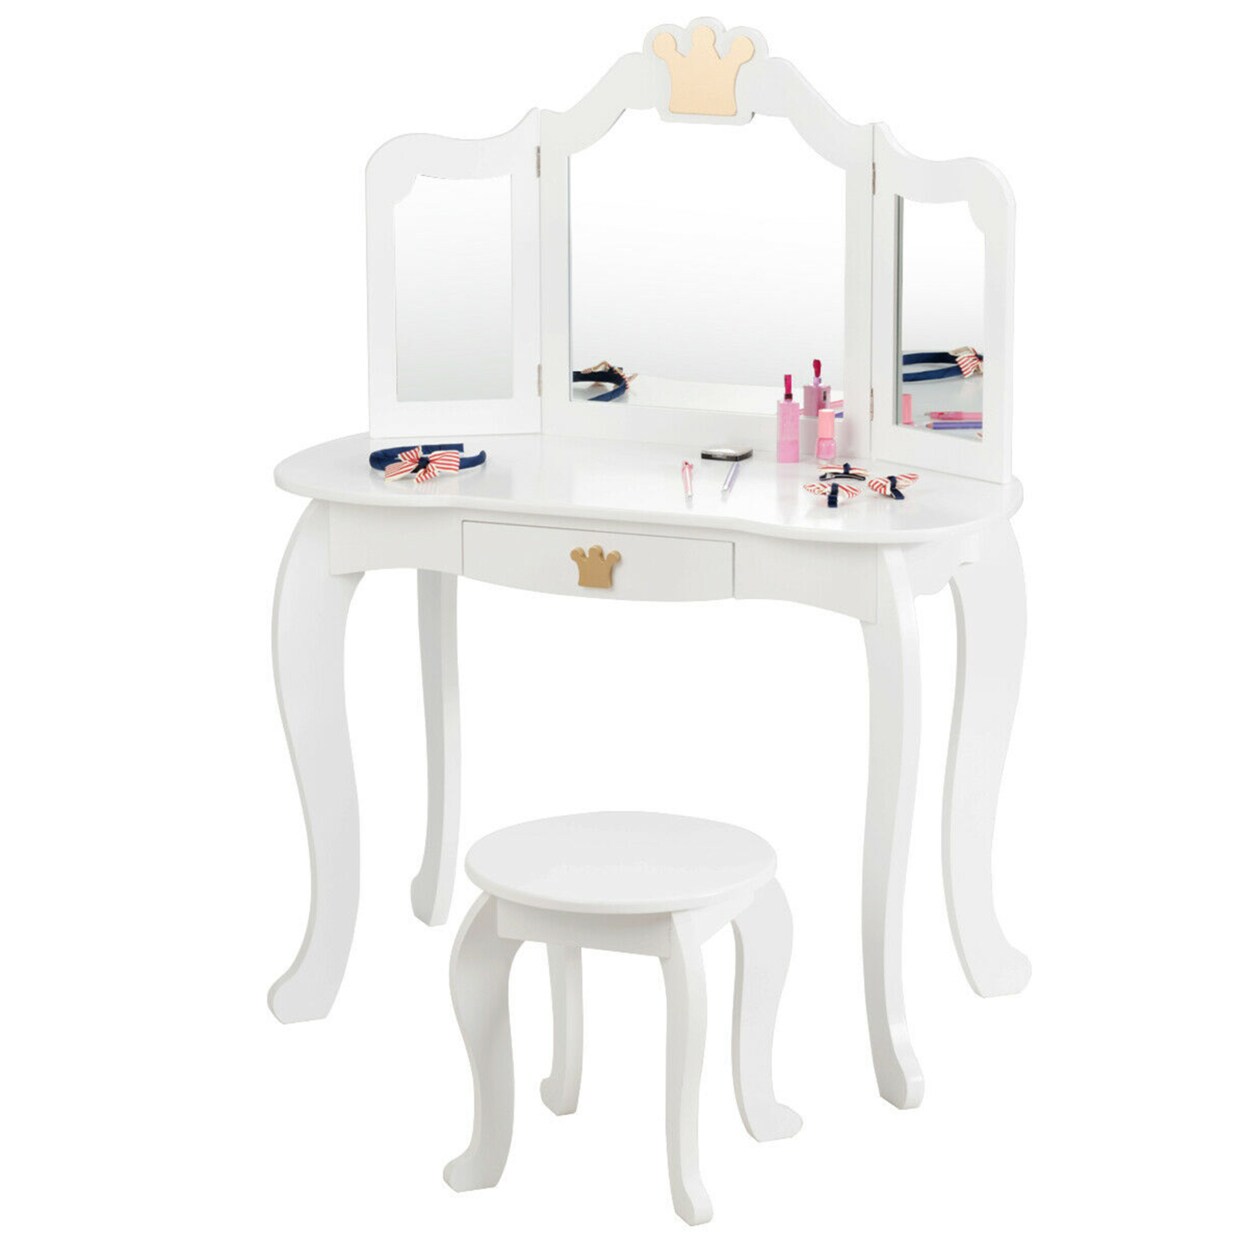 Gymax Kids Makeup Dressing Table Chair Set Princess Vanity and Tri-folding Mirror White